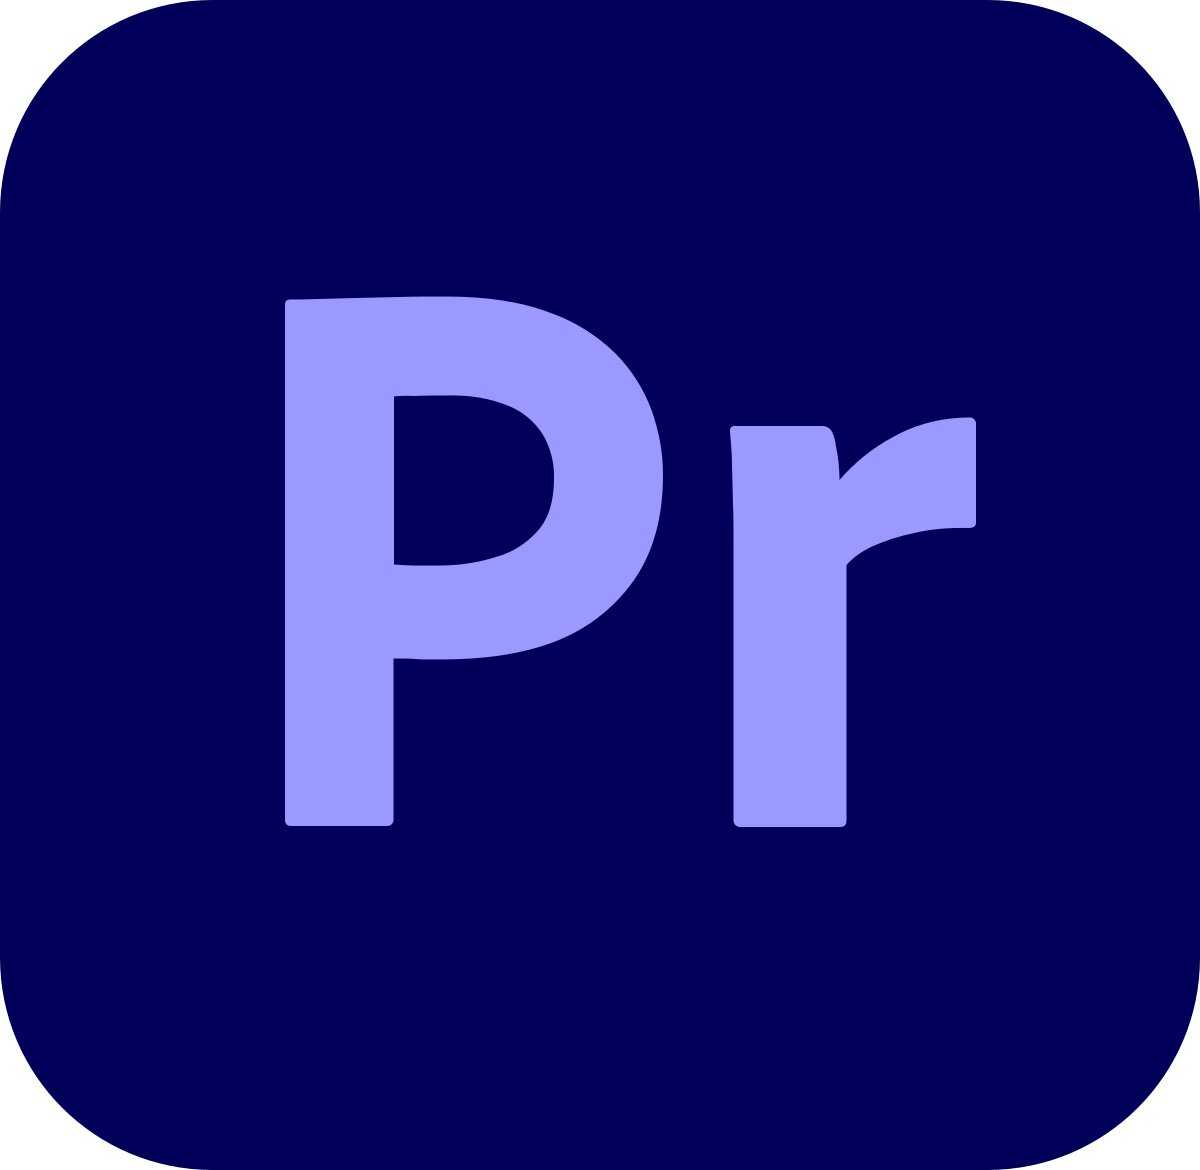 Adobe Premiere Pro 2022 v22.6.2.2 Latest Version